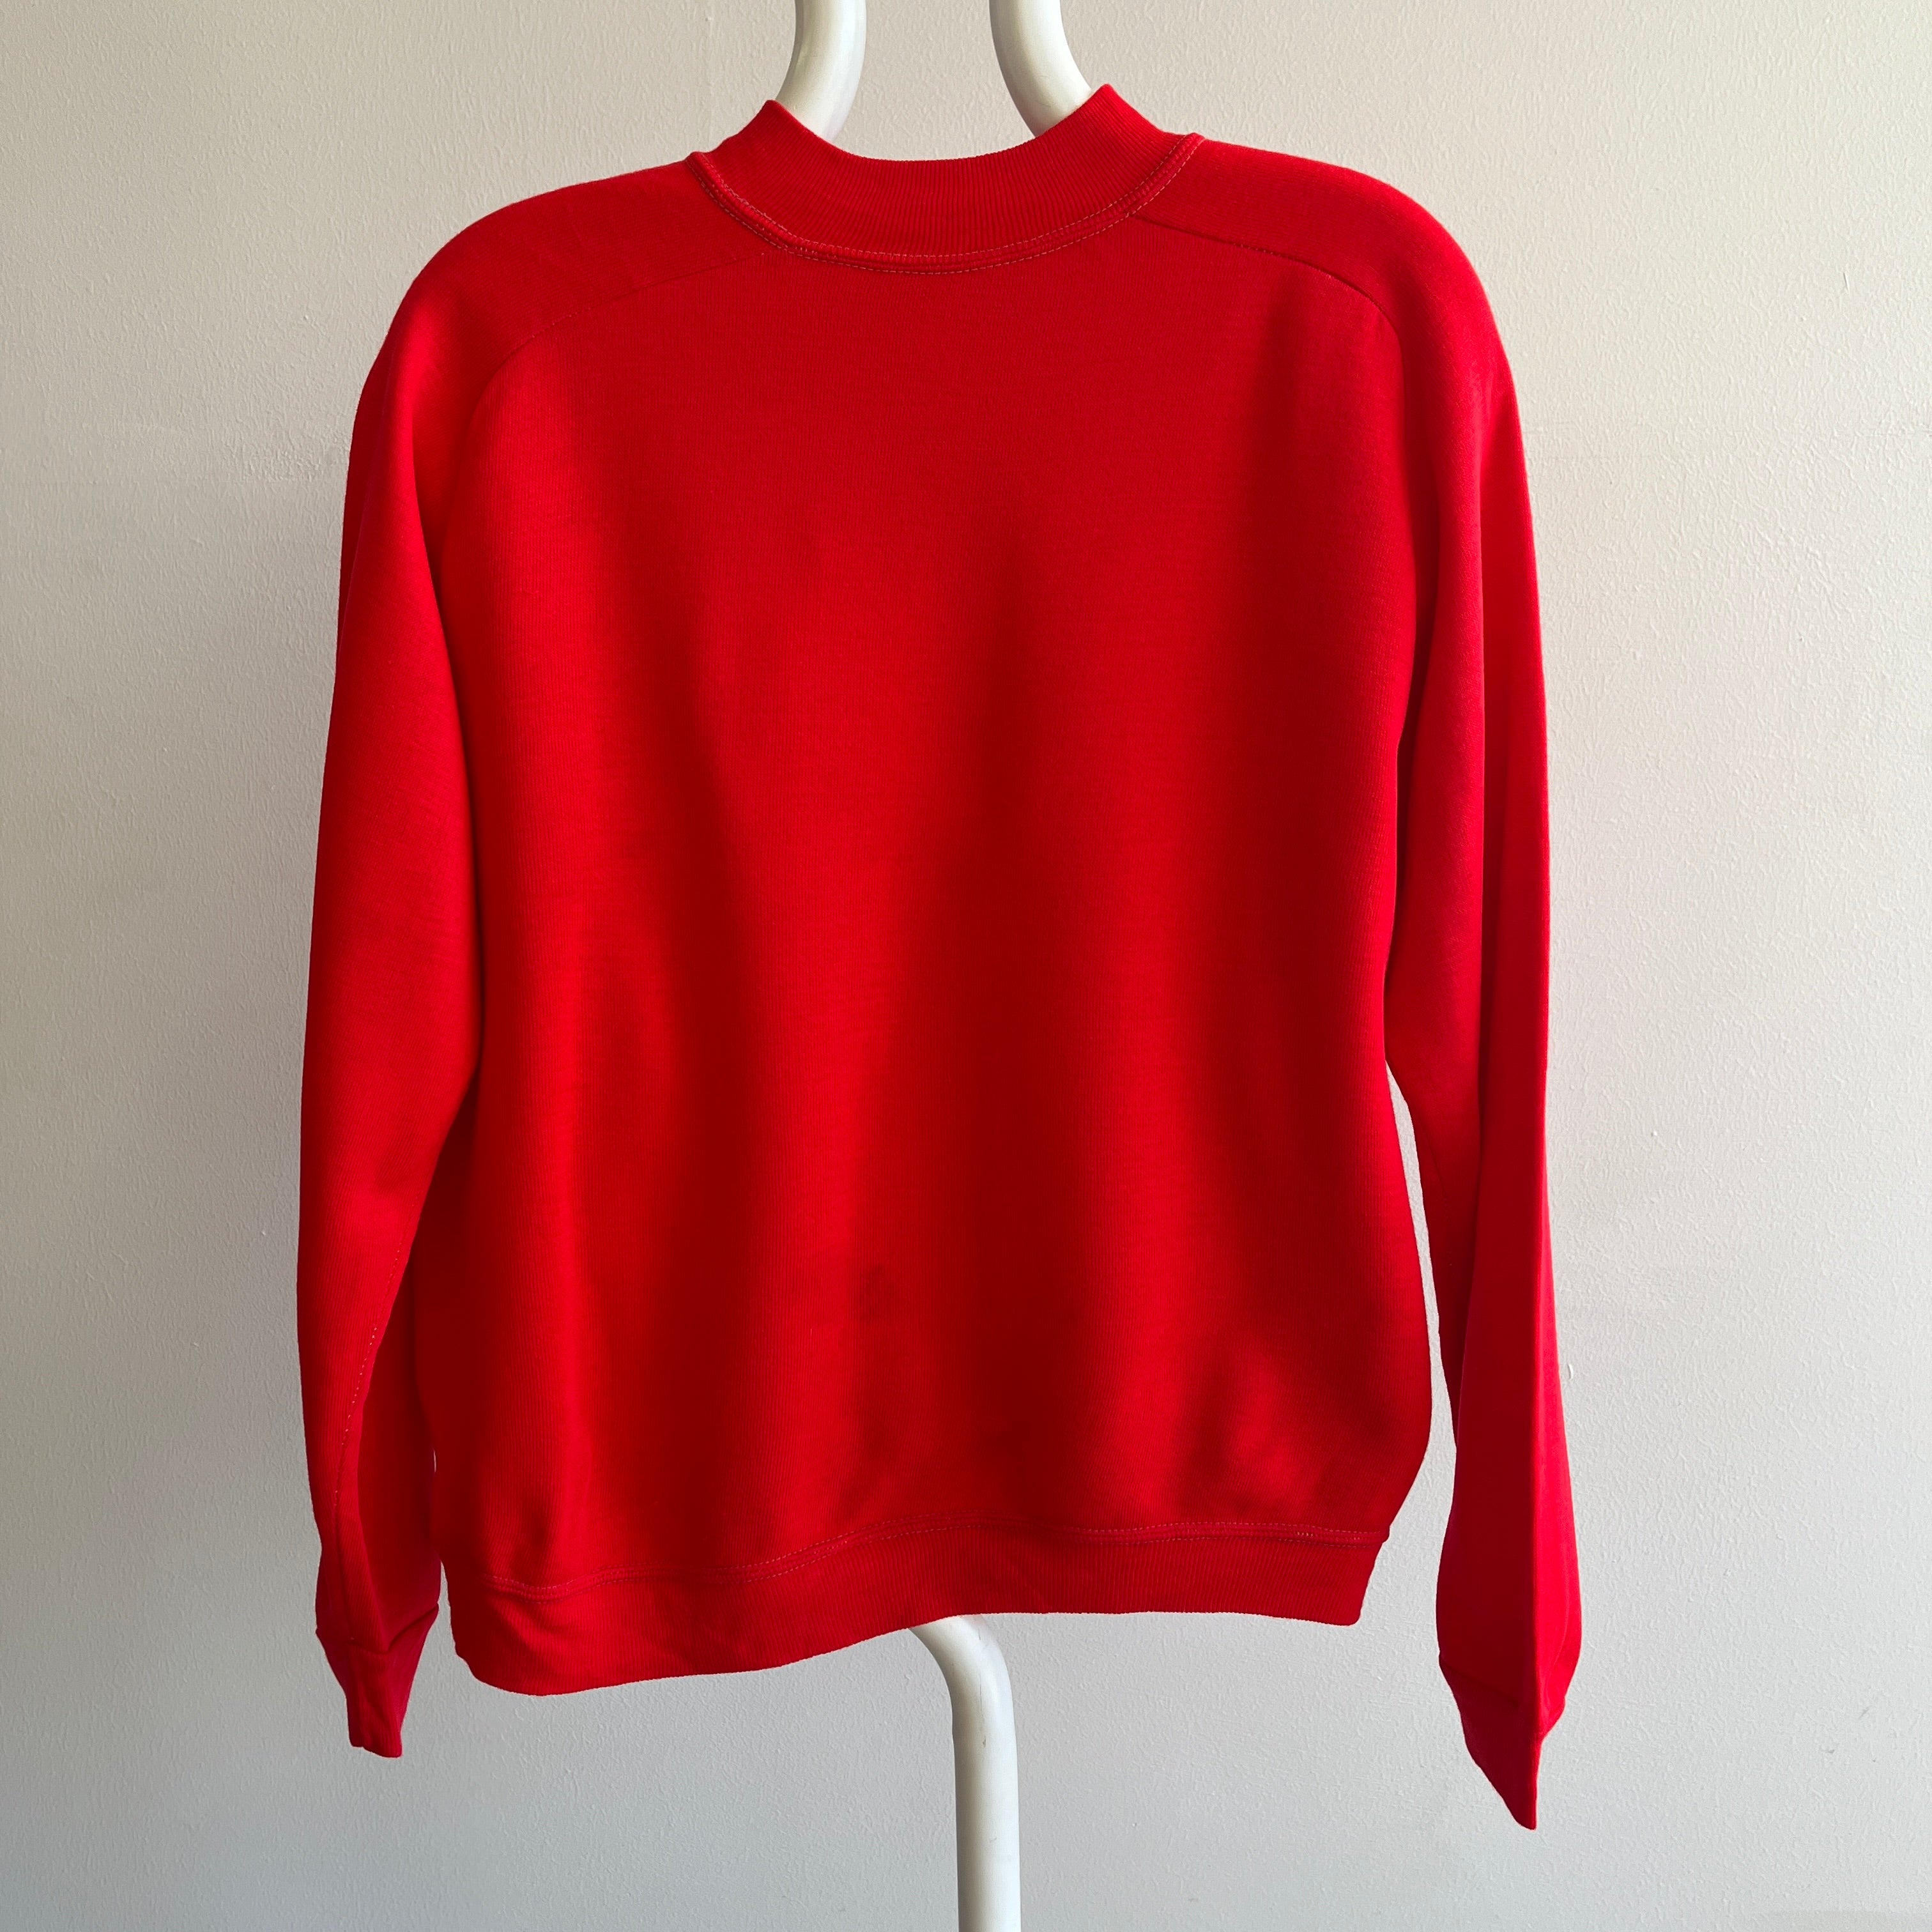 1950/60s Creslan Neon Orange/Red Rare Sweatshirt - look at the cut!